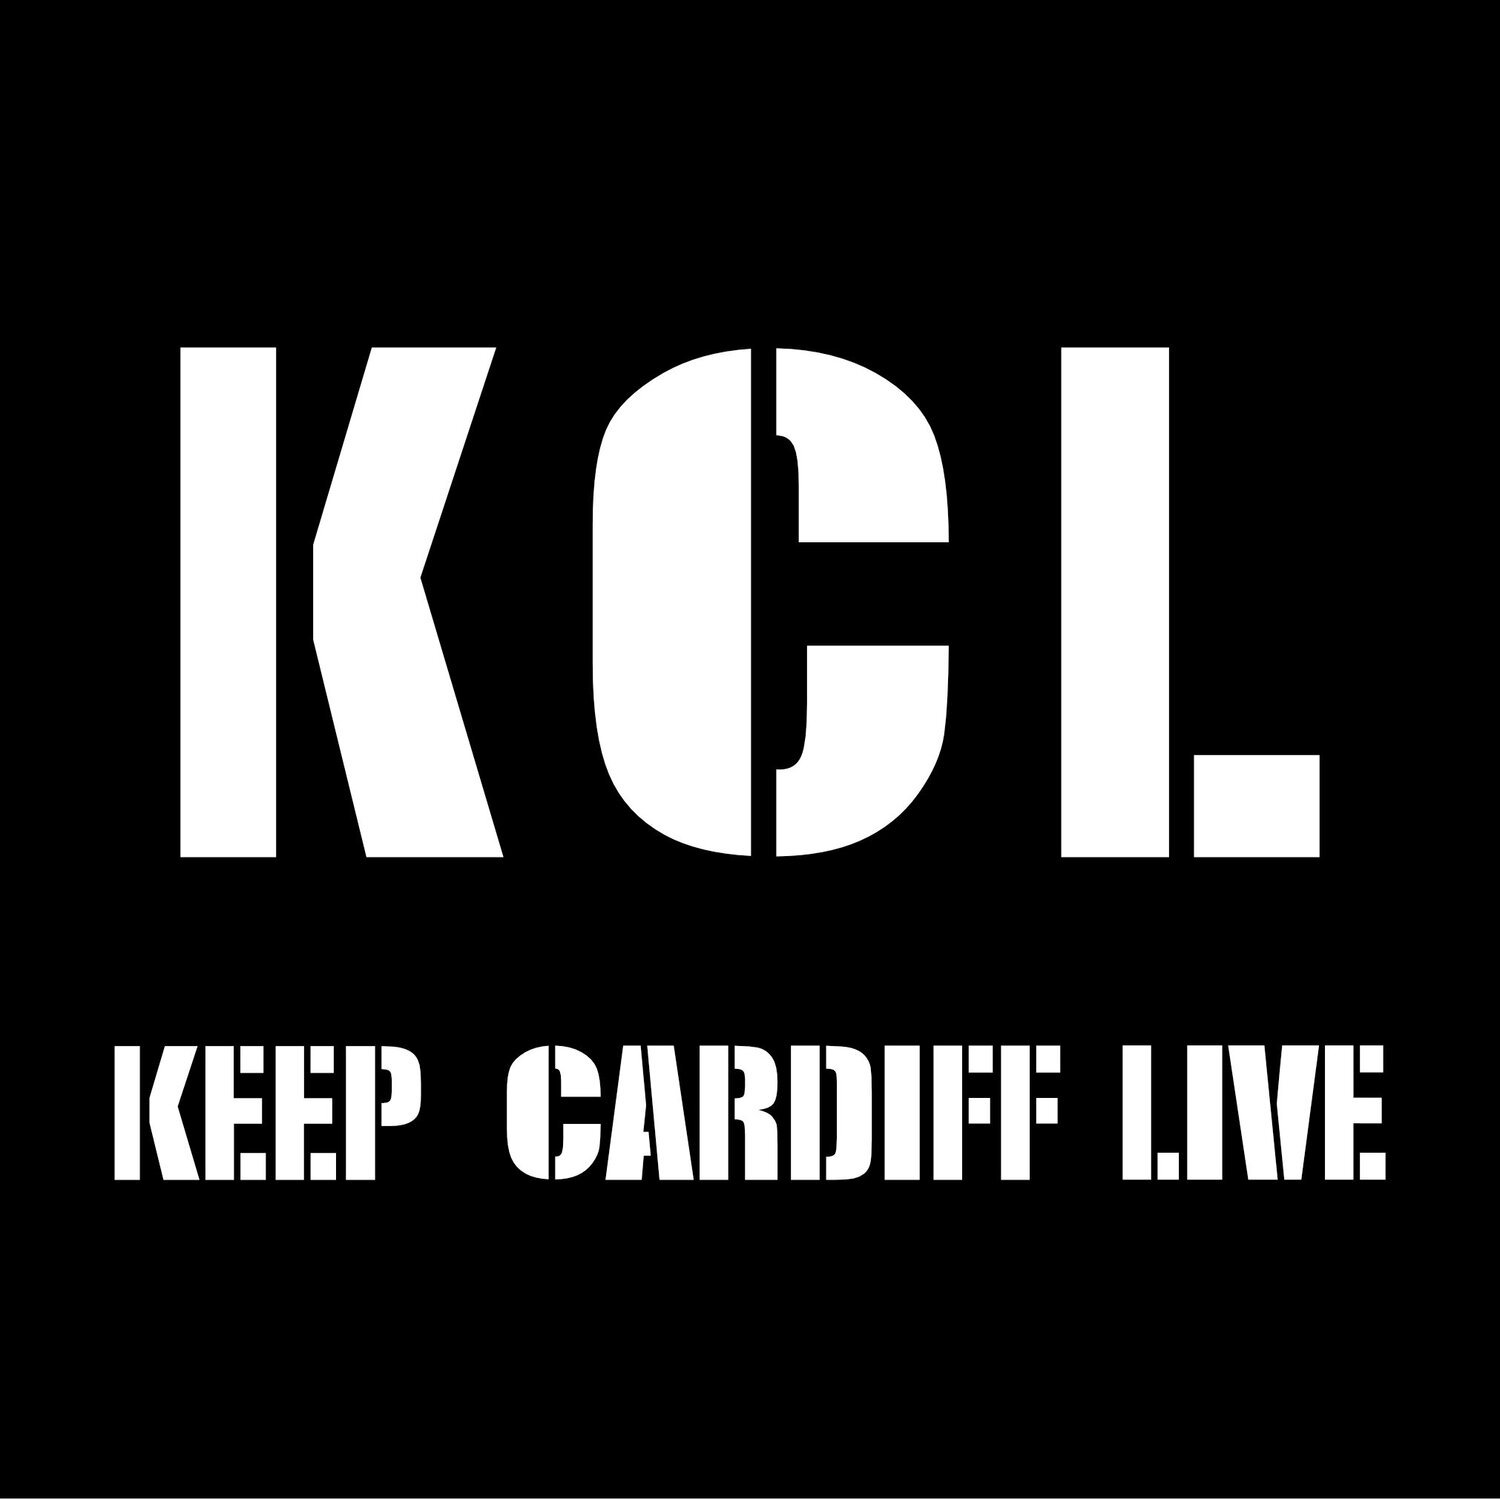 Cardiff Live